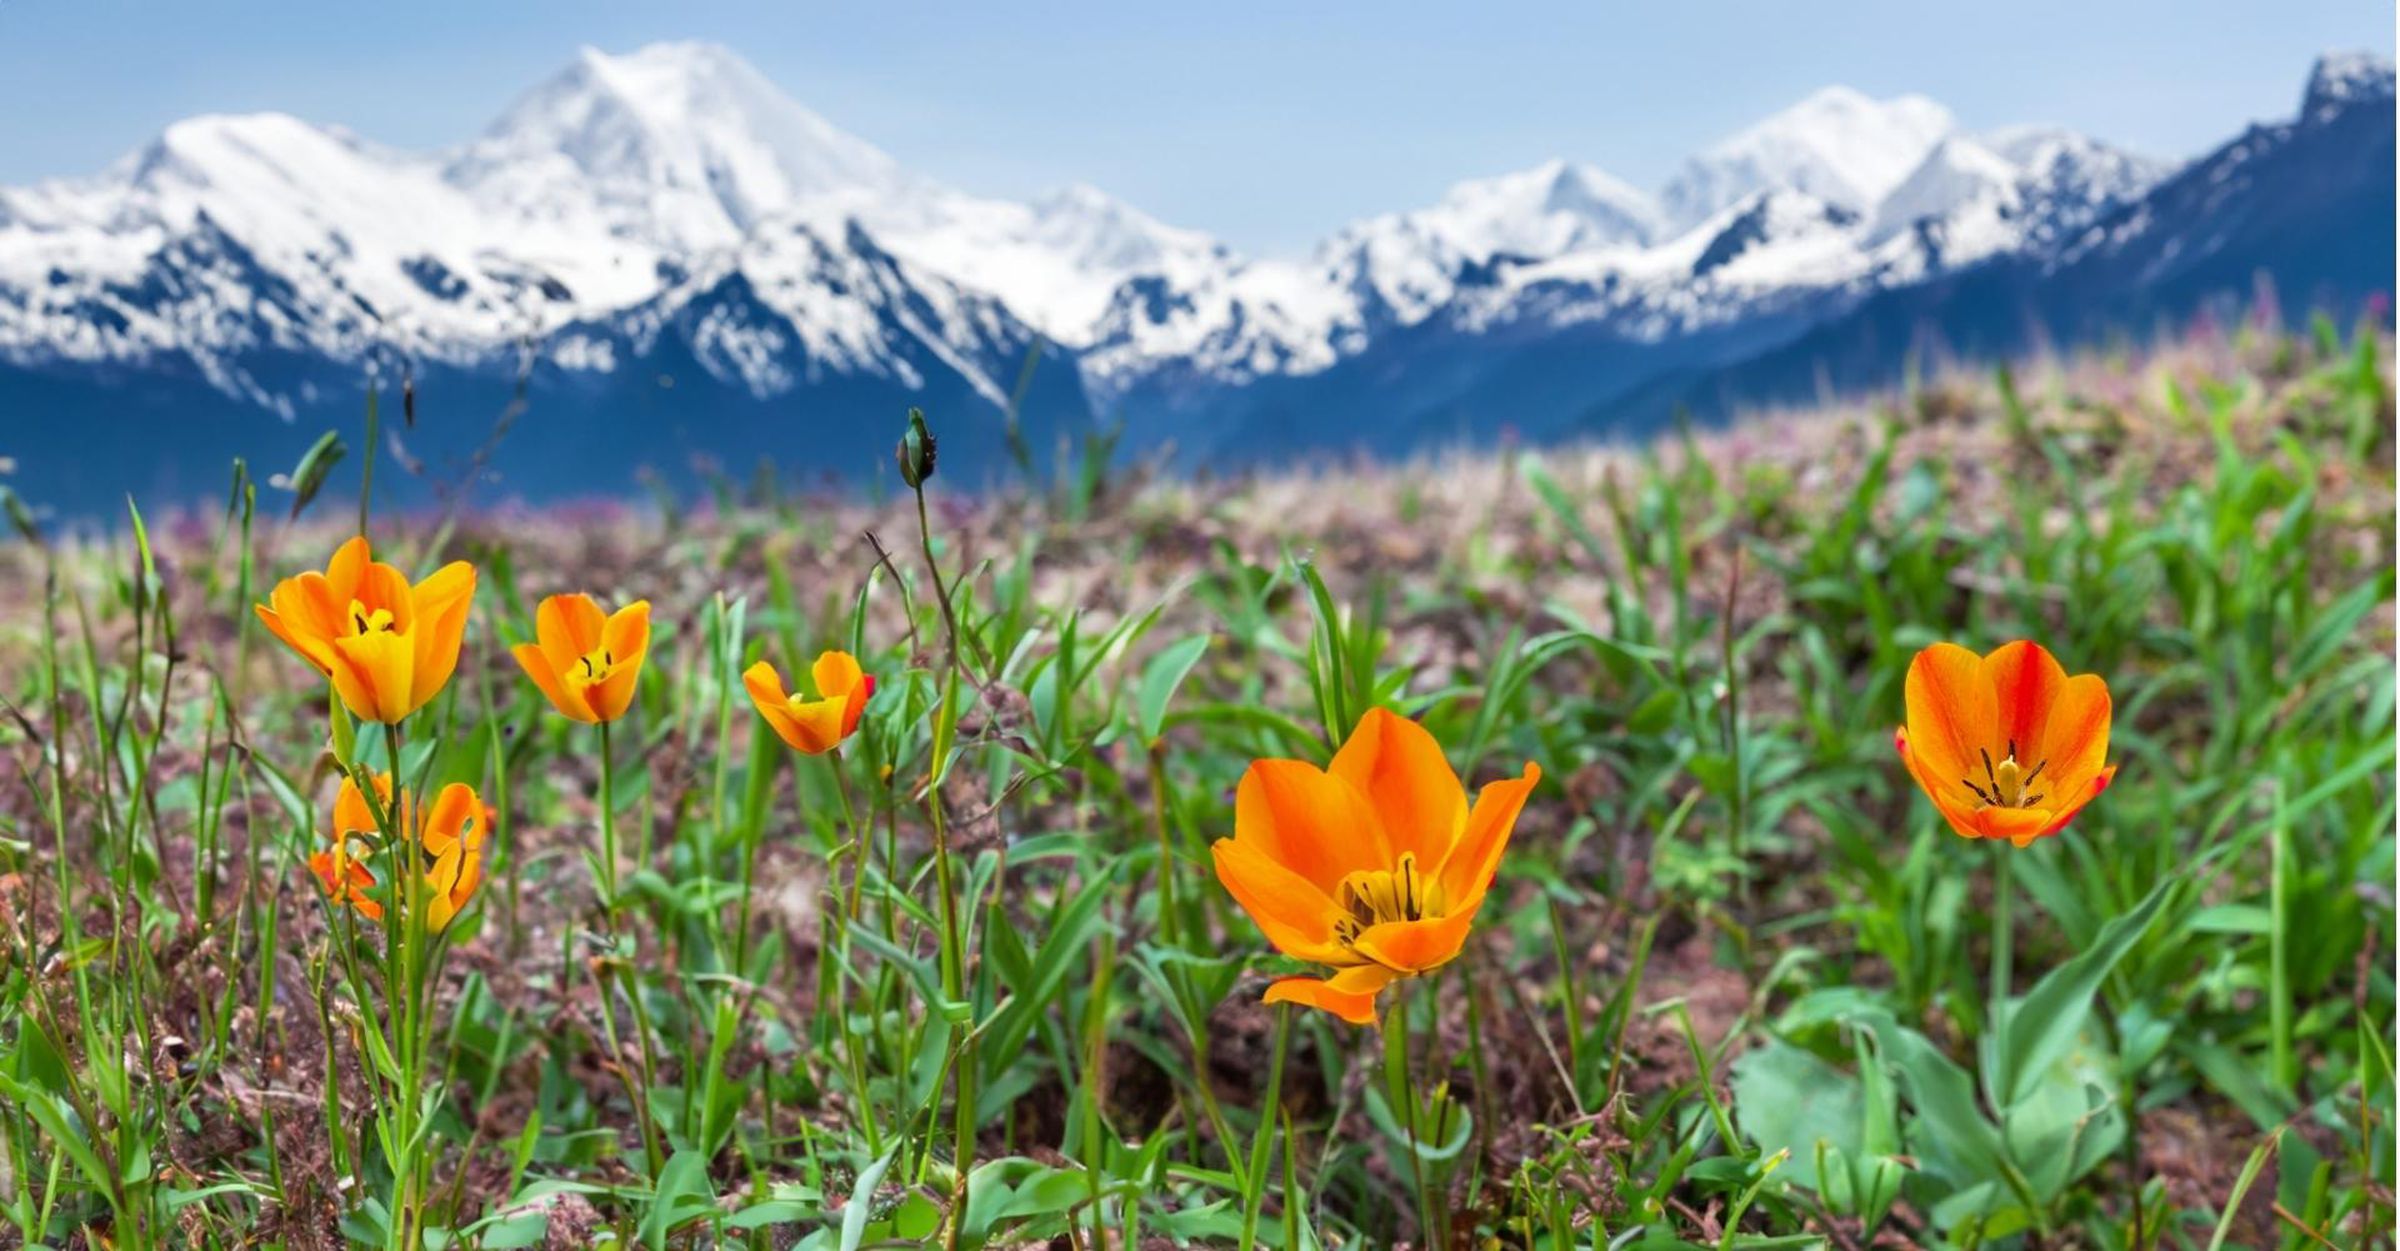 An AI-edited image of a field of orange Crocus flowers